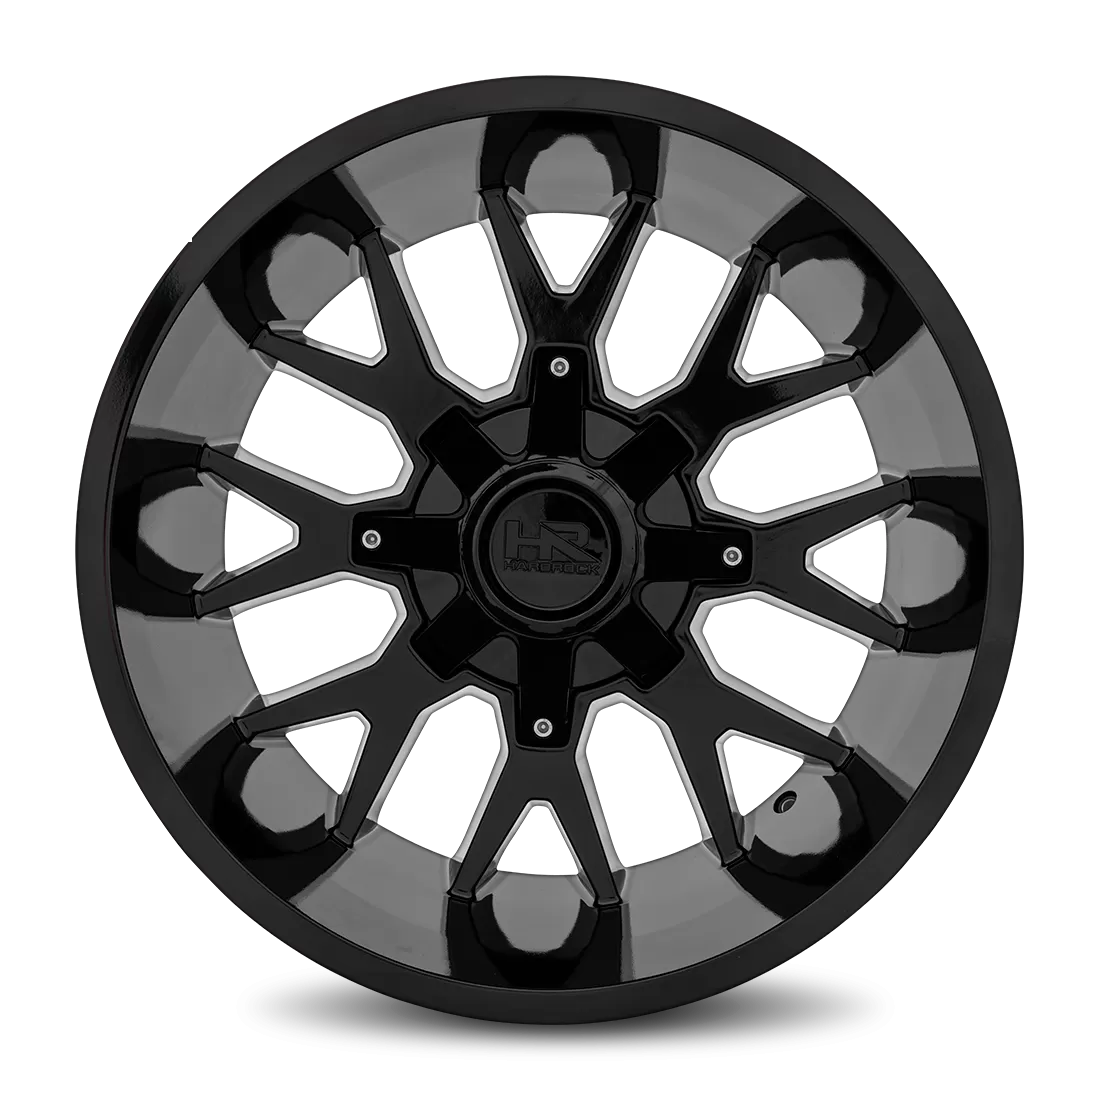 Hardrock Offroad Affliction Aluminum Wheel 20x12 5x127/139.7 -44 87 Gloss Black - H700-201252144GB